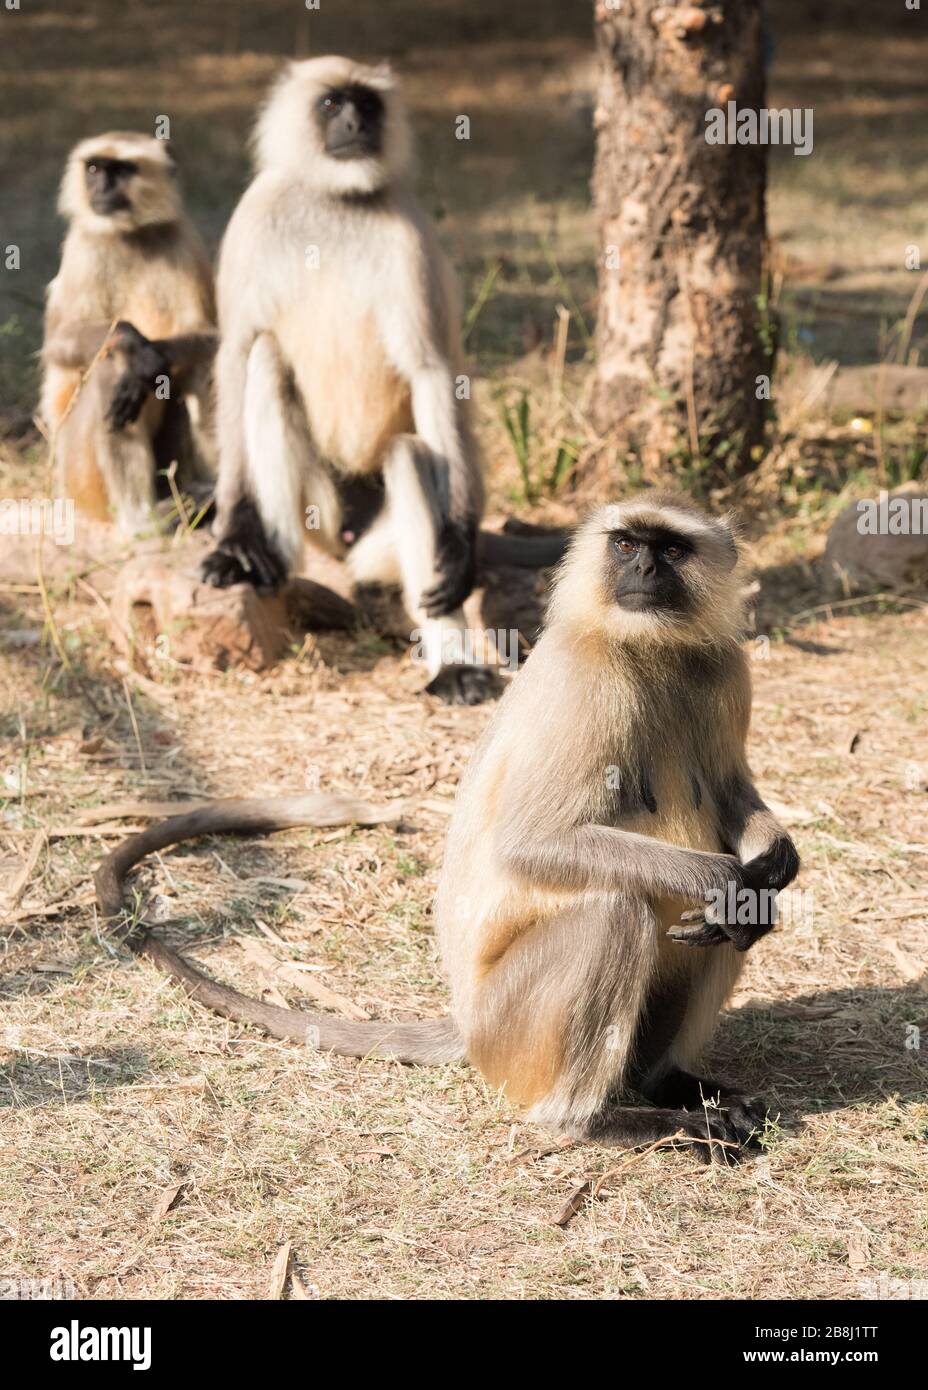 Ranthambore Wildlife Sanctuary, parc national, Rajasthan, Inde Banque D'Images